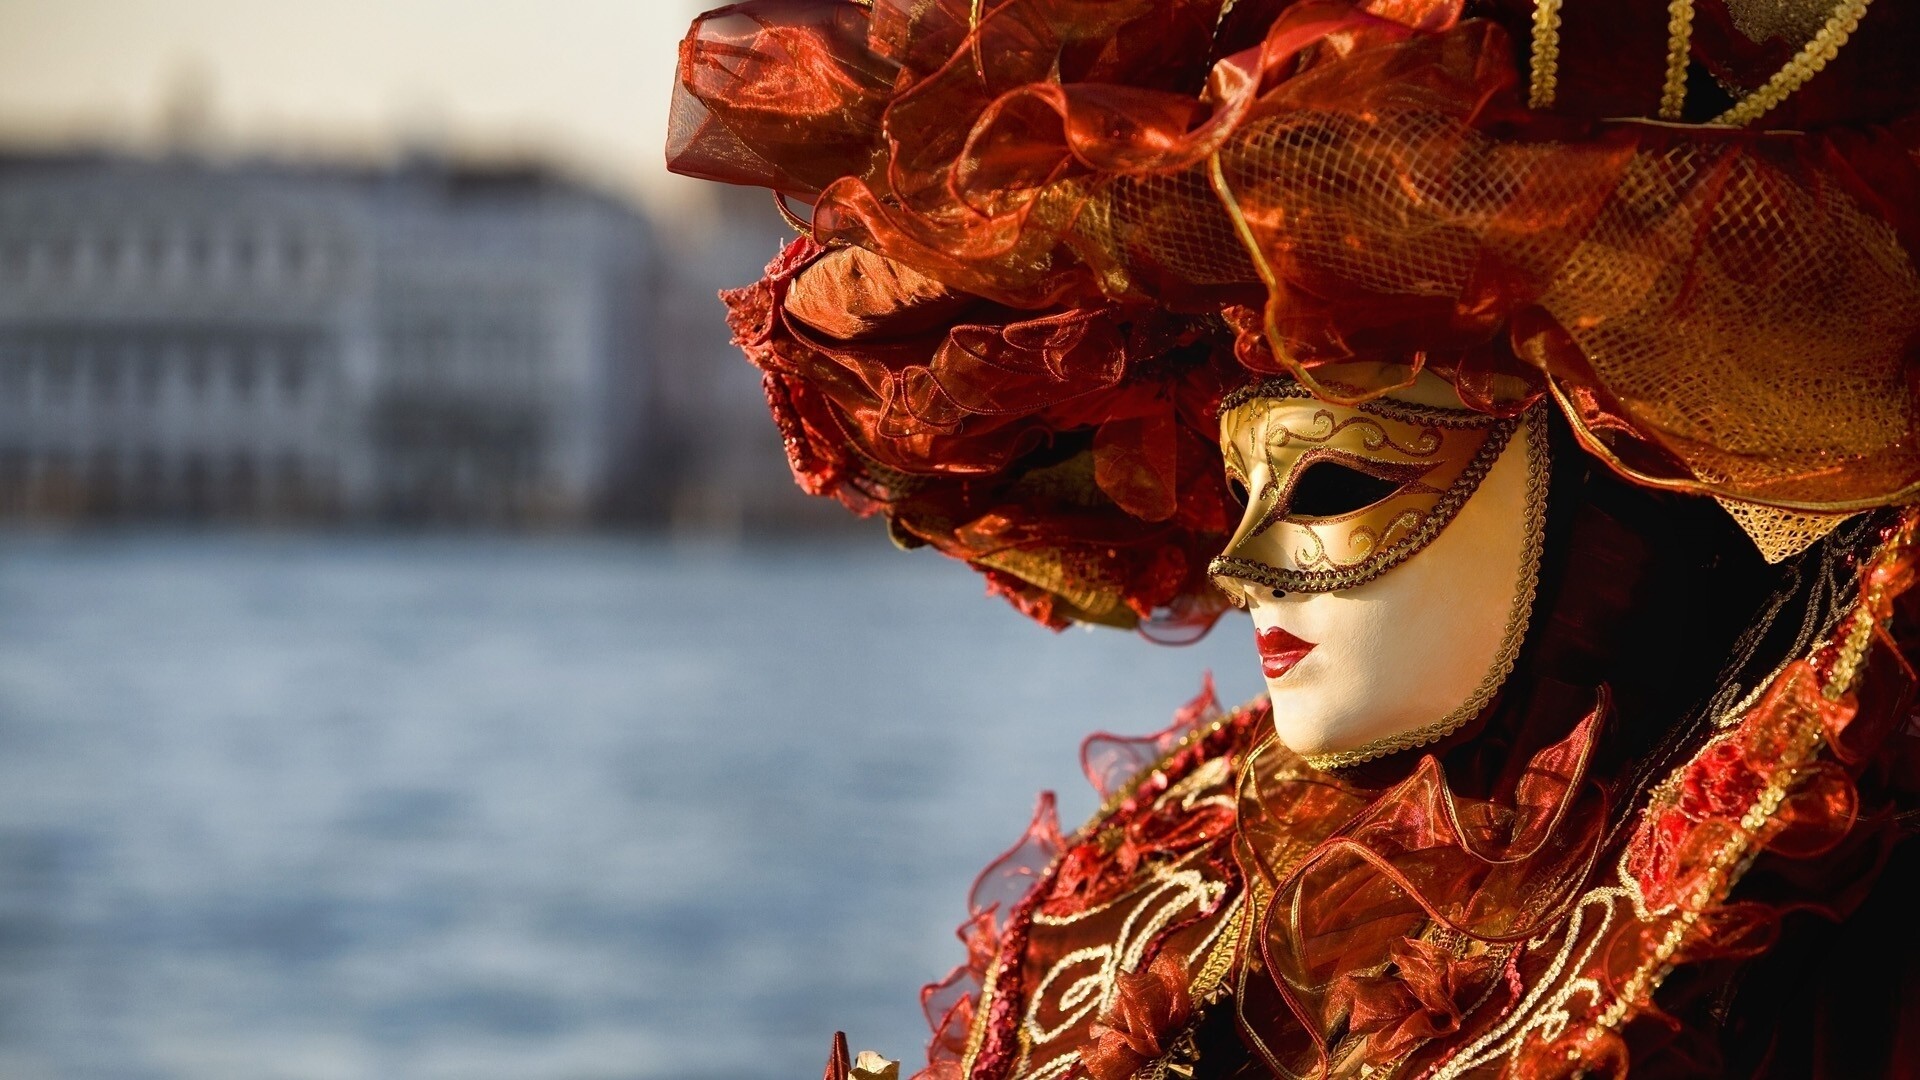 Carnival: The Carnevale di Venezia, One of the most famous carnivals around the world. 1920x1080 Full HD Wallpaper.